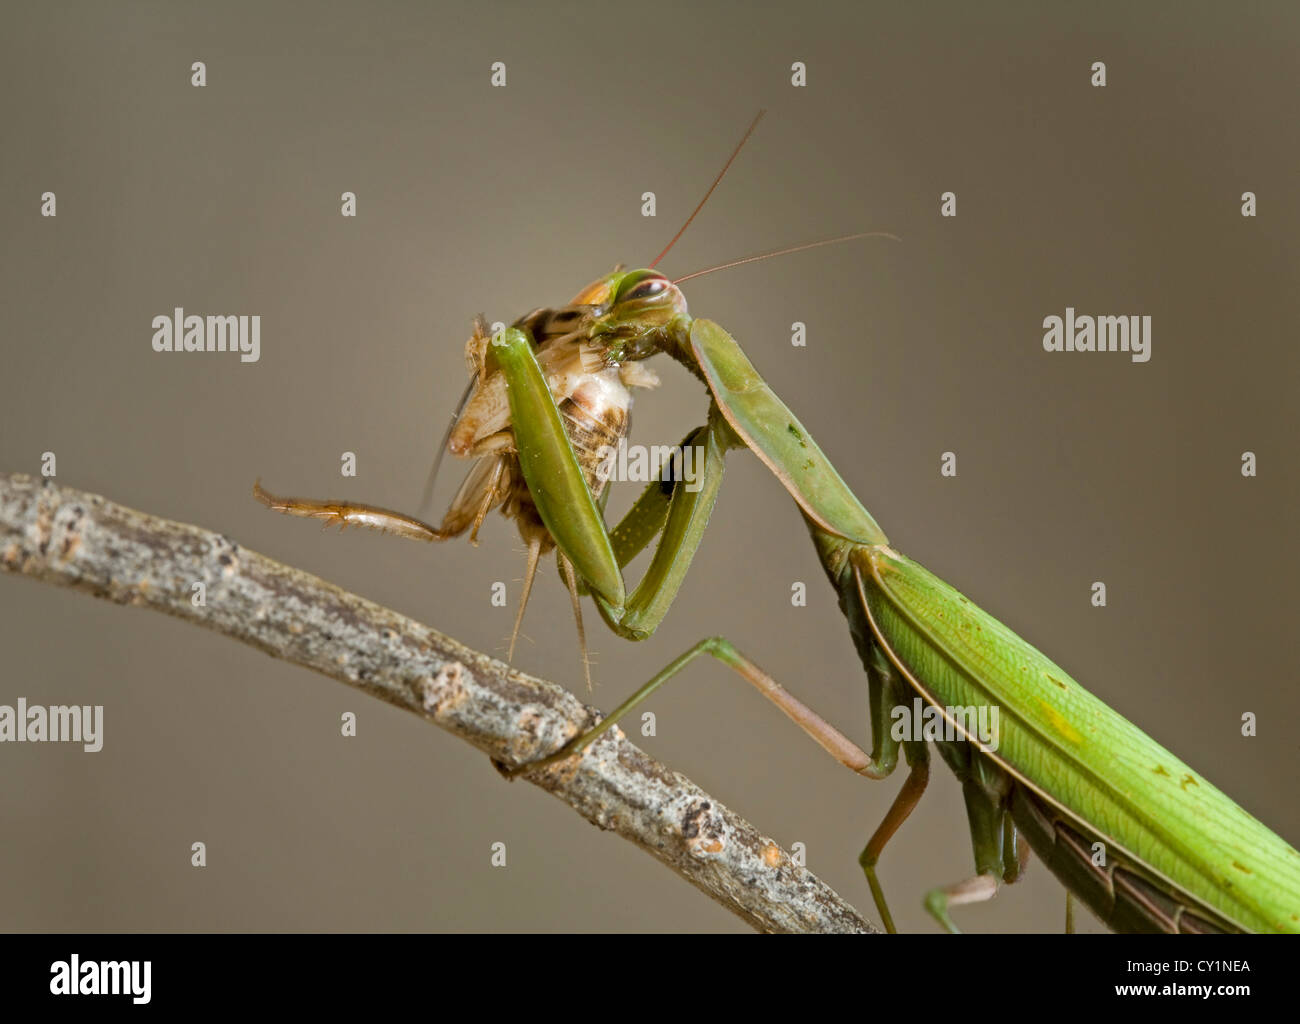 A praying mantis eating a cricket Stock Photo